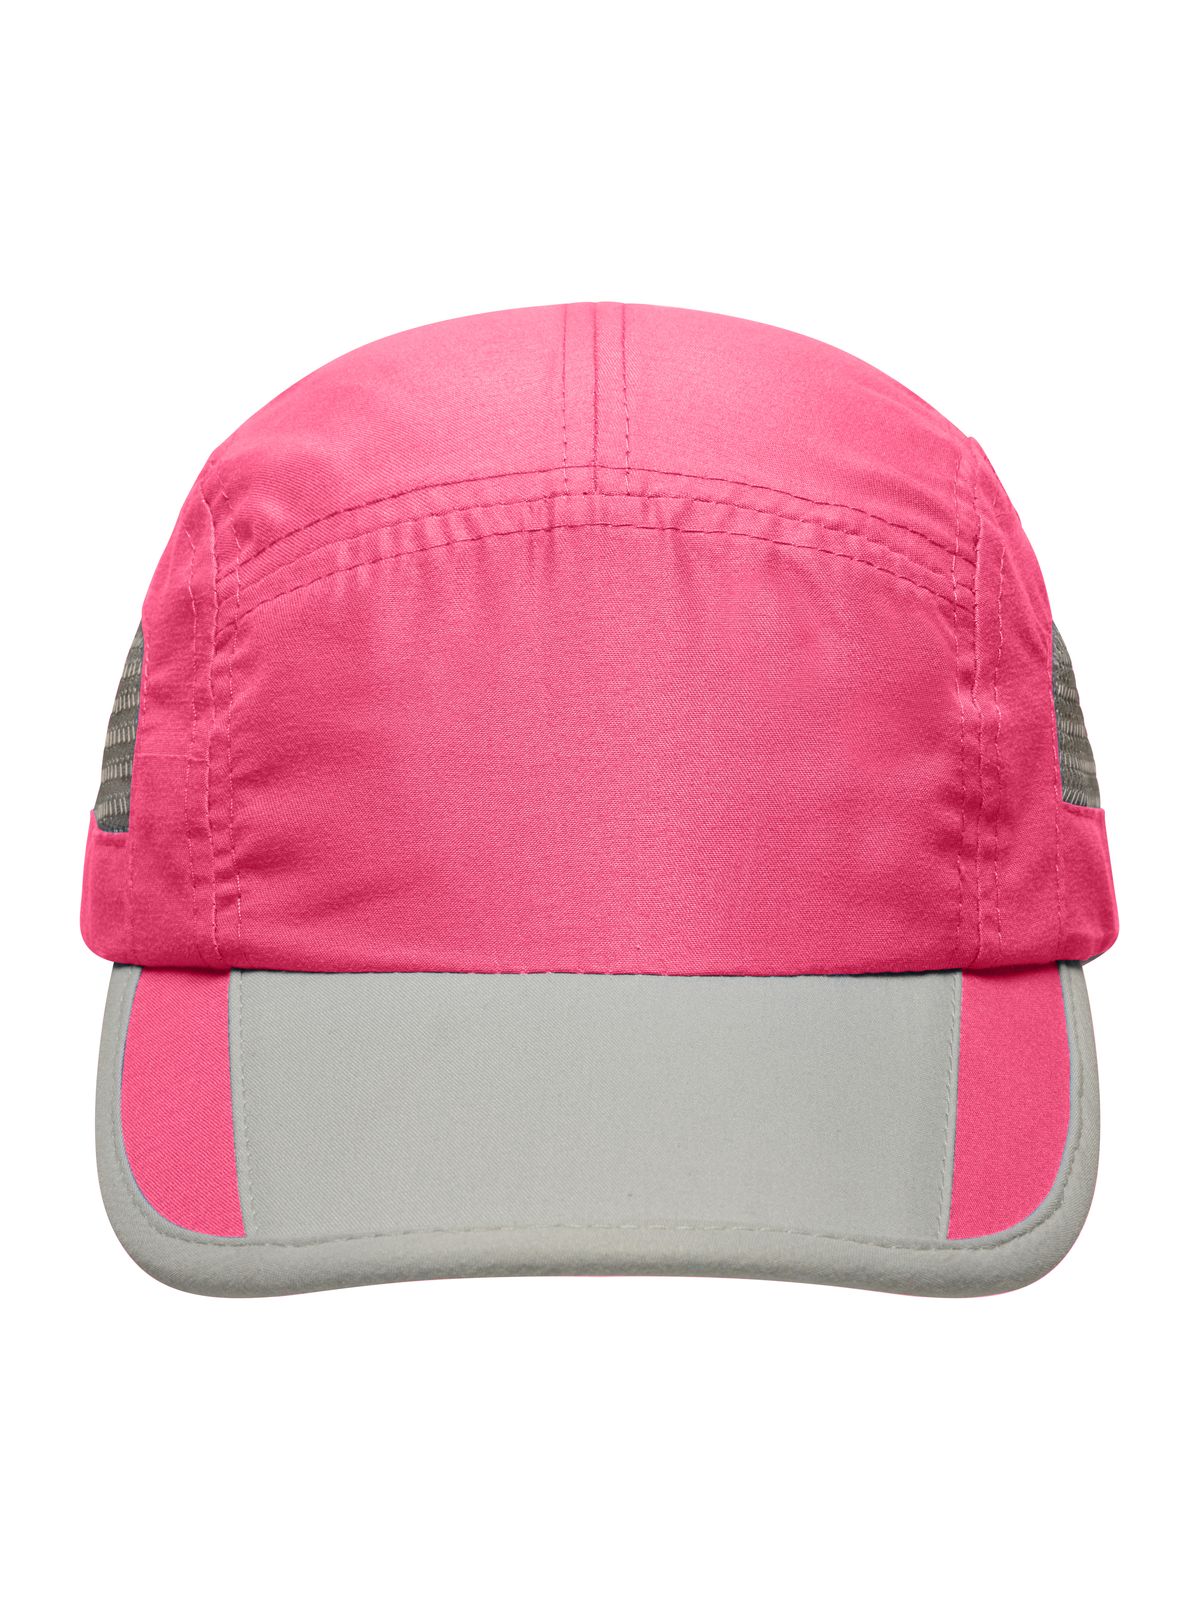 5-panel-sportive-cap-pink-light-grey.webp